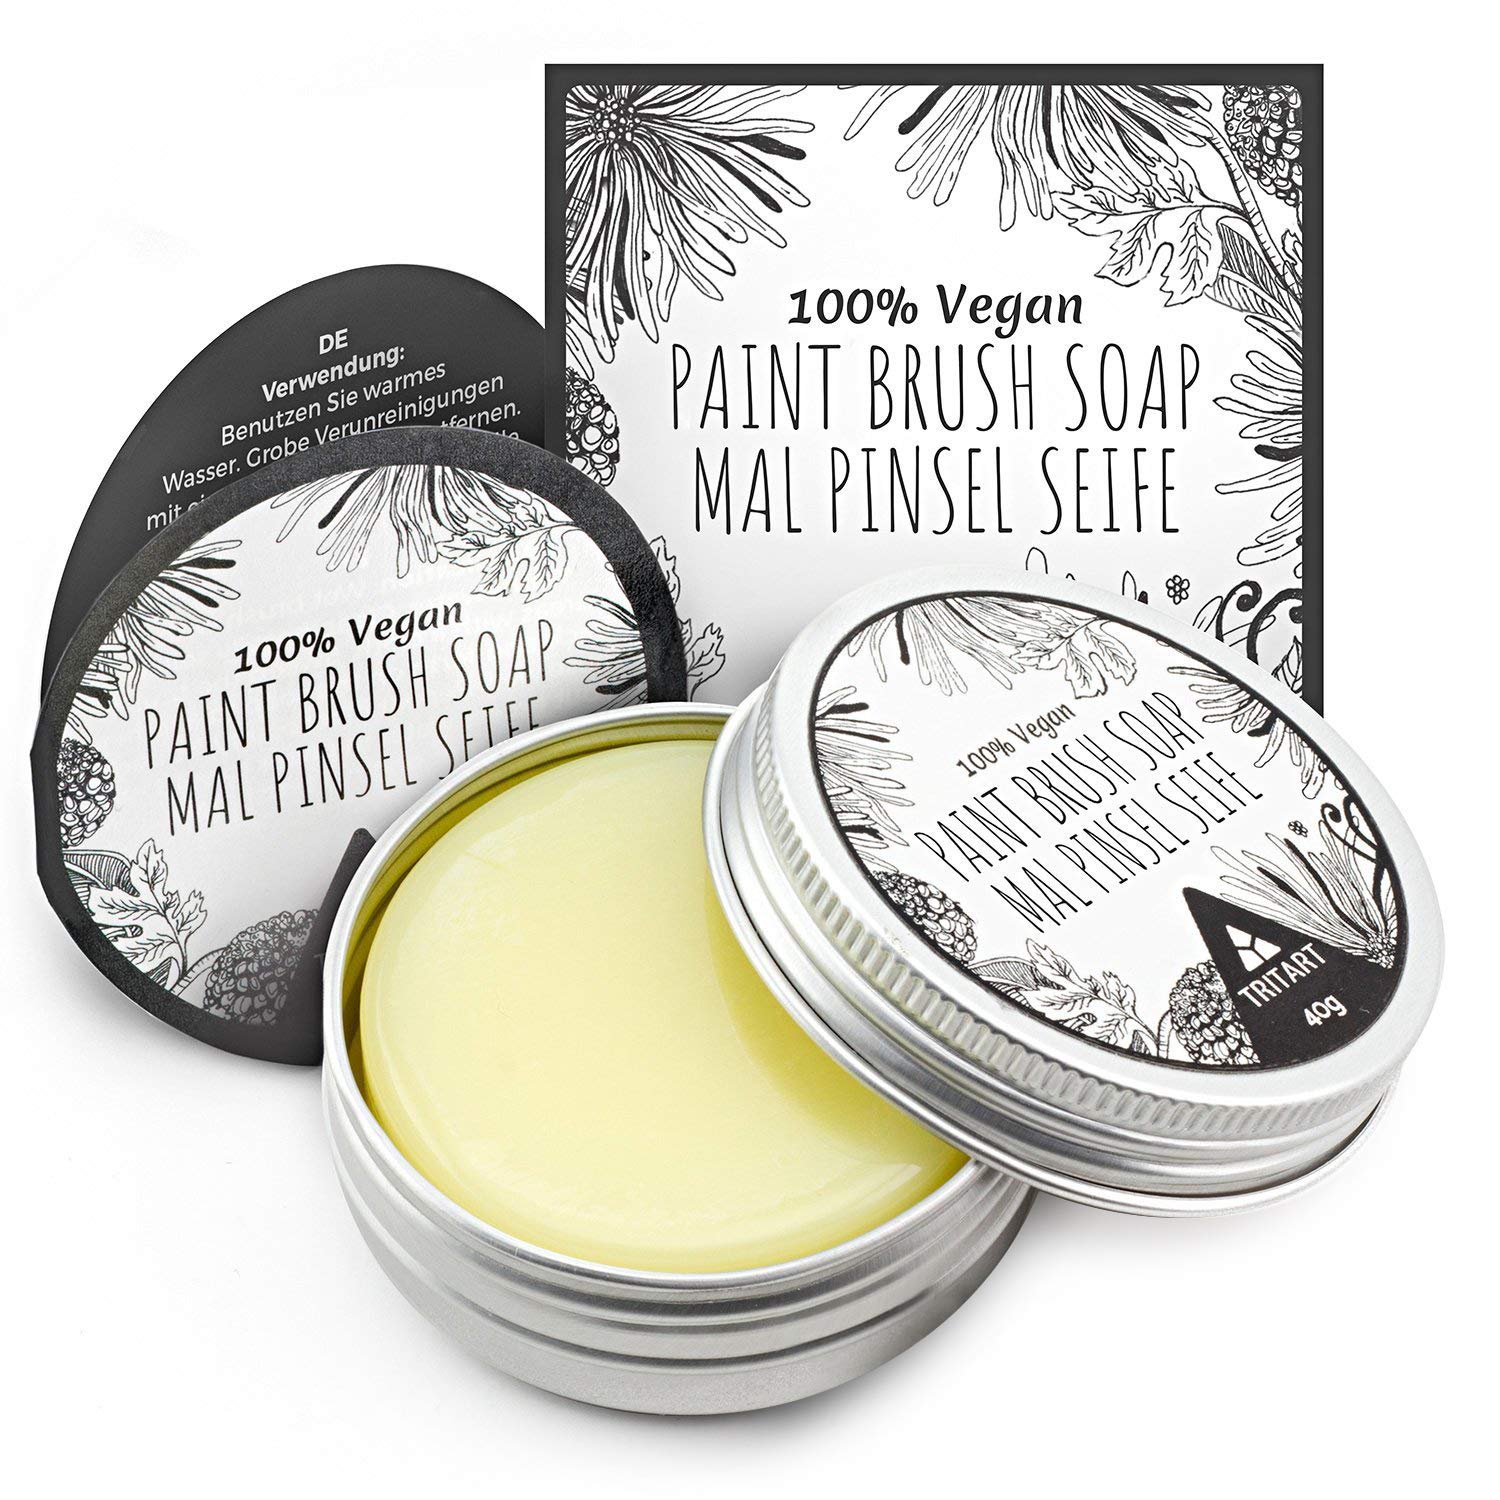 TRITART 100% Vegan Paint Brush Cleaner Soap for Makeup Watercolor & Acrylic  Paint Brushes - Lemon Scented Paint Soap for Cleaning Oil Paint Brushes